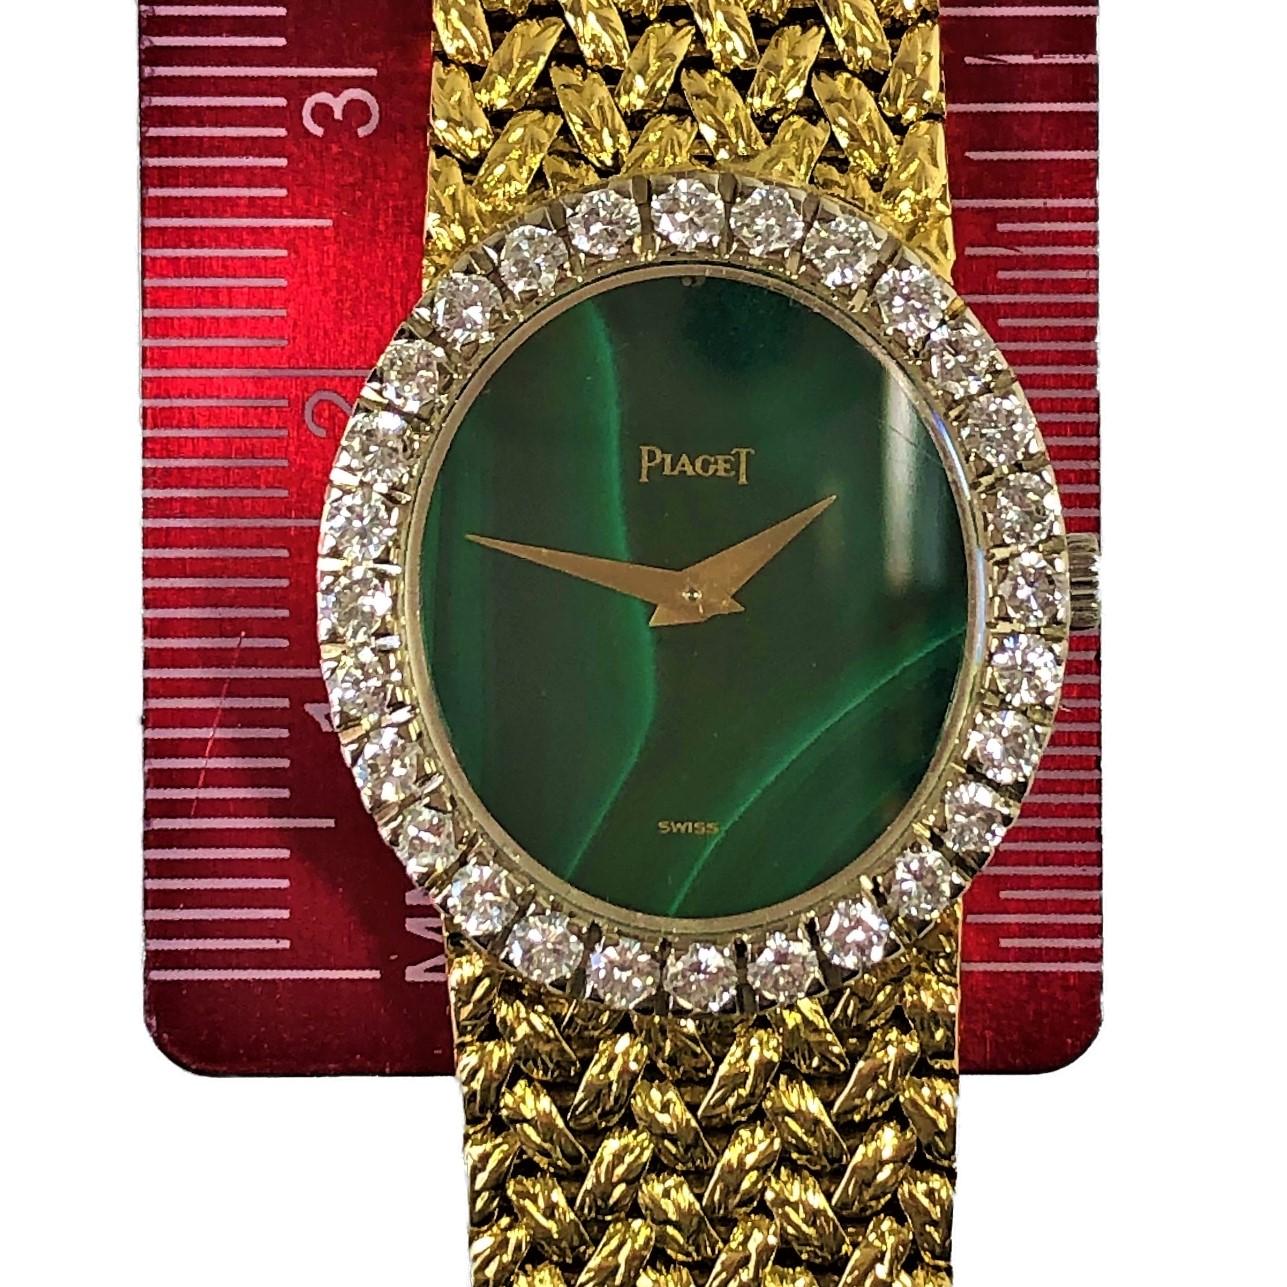 Piaget Vintage Green Malachite Dial Ladies Watch Retailed by Van Cleef & Arpels 1